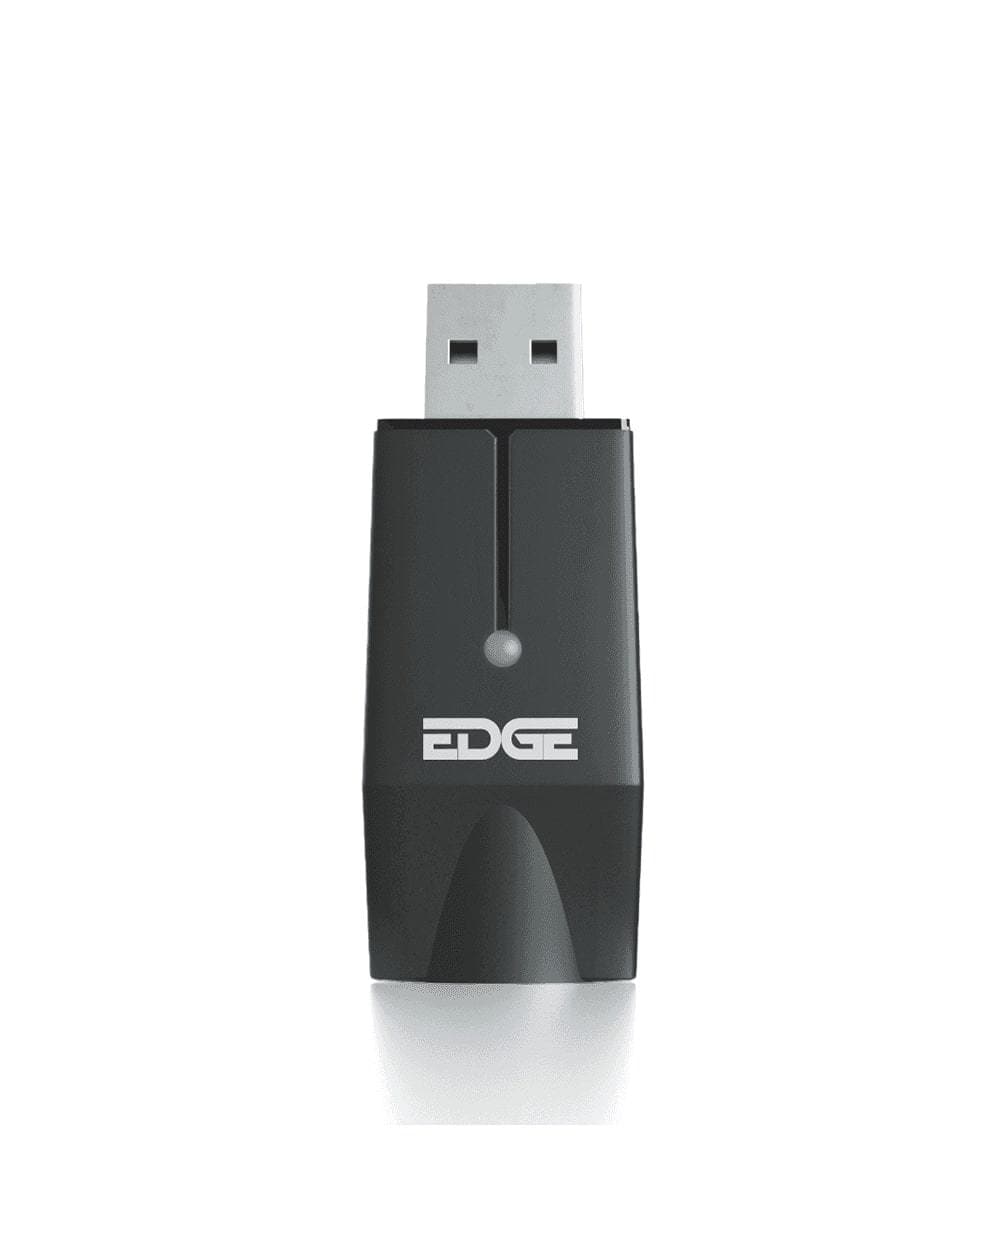 EDGE Cartomiser USB Charger